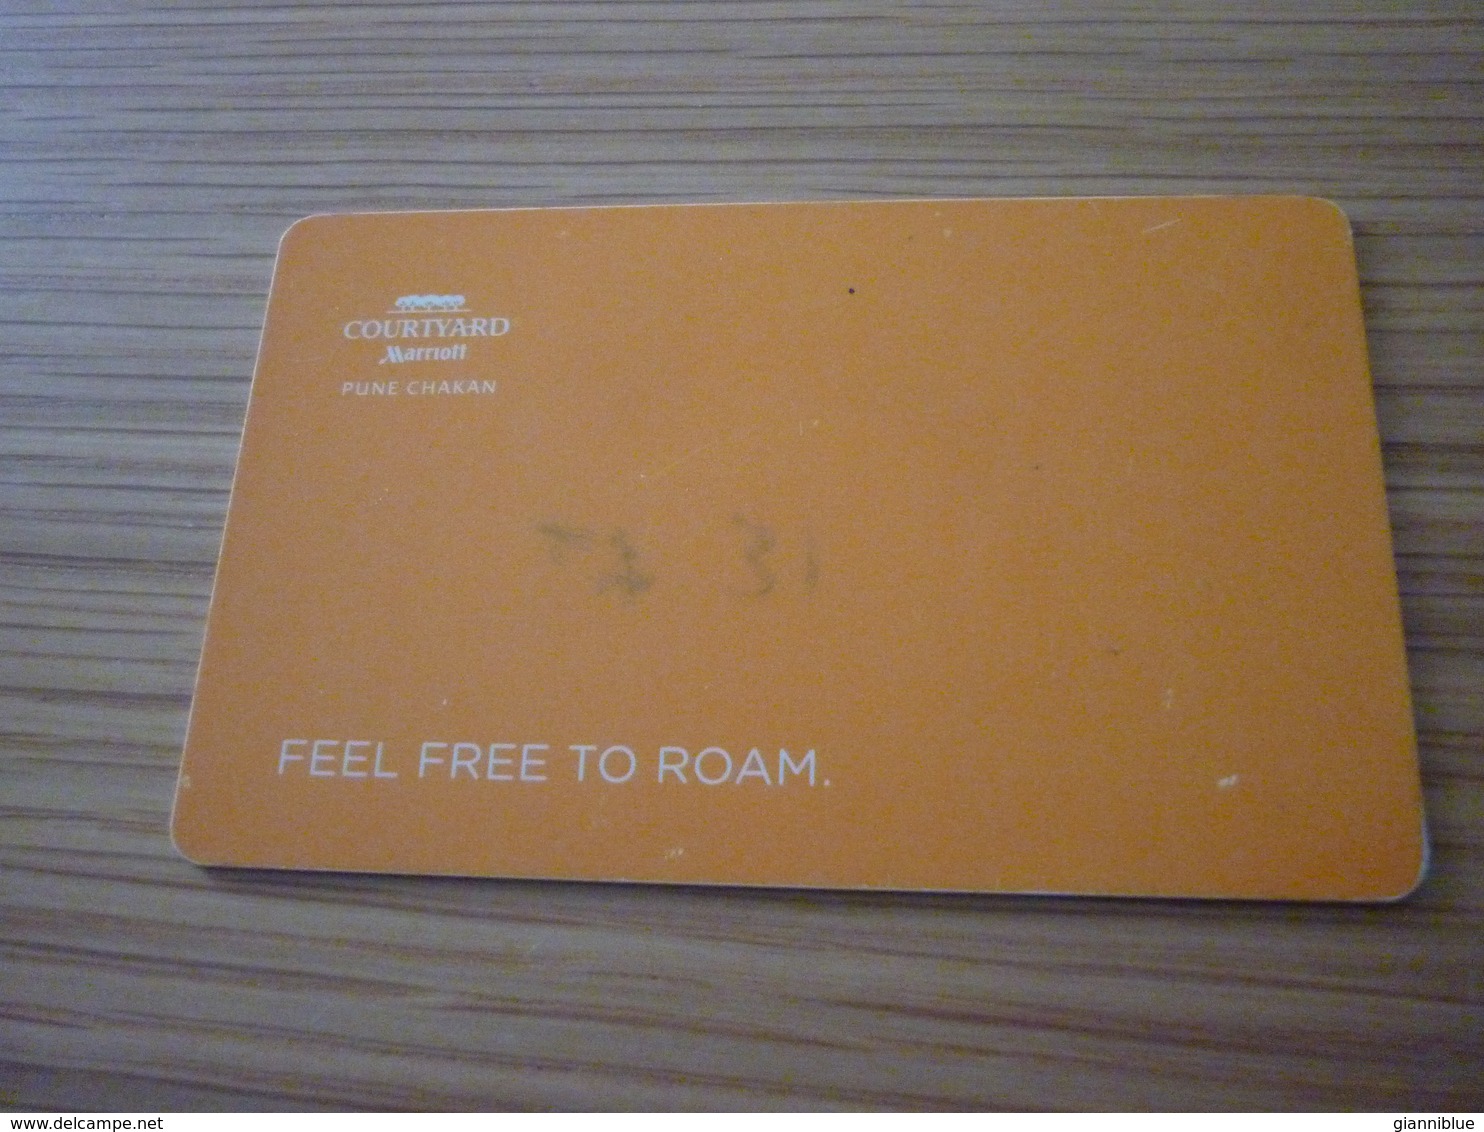 India Pune Chakan Marriott Courtyard Hotel Room Key Card - Hotel Keycards